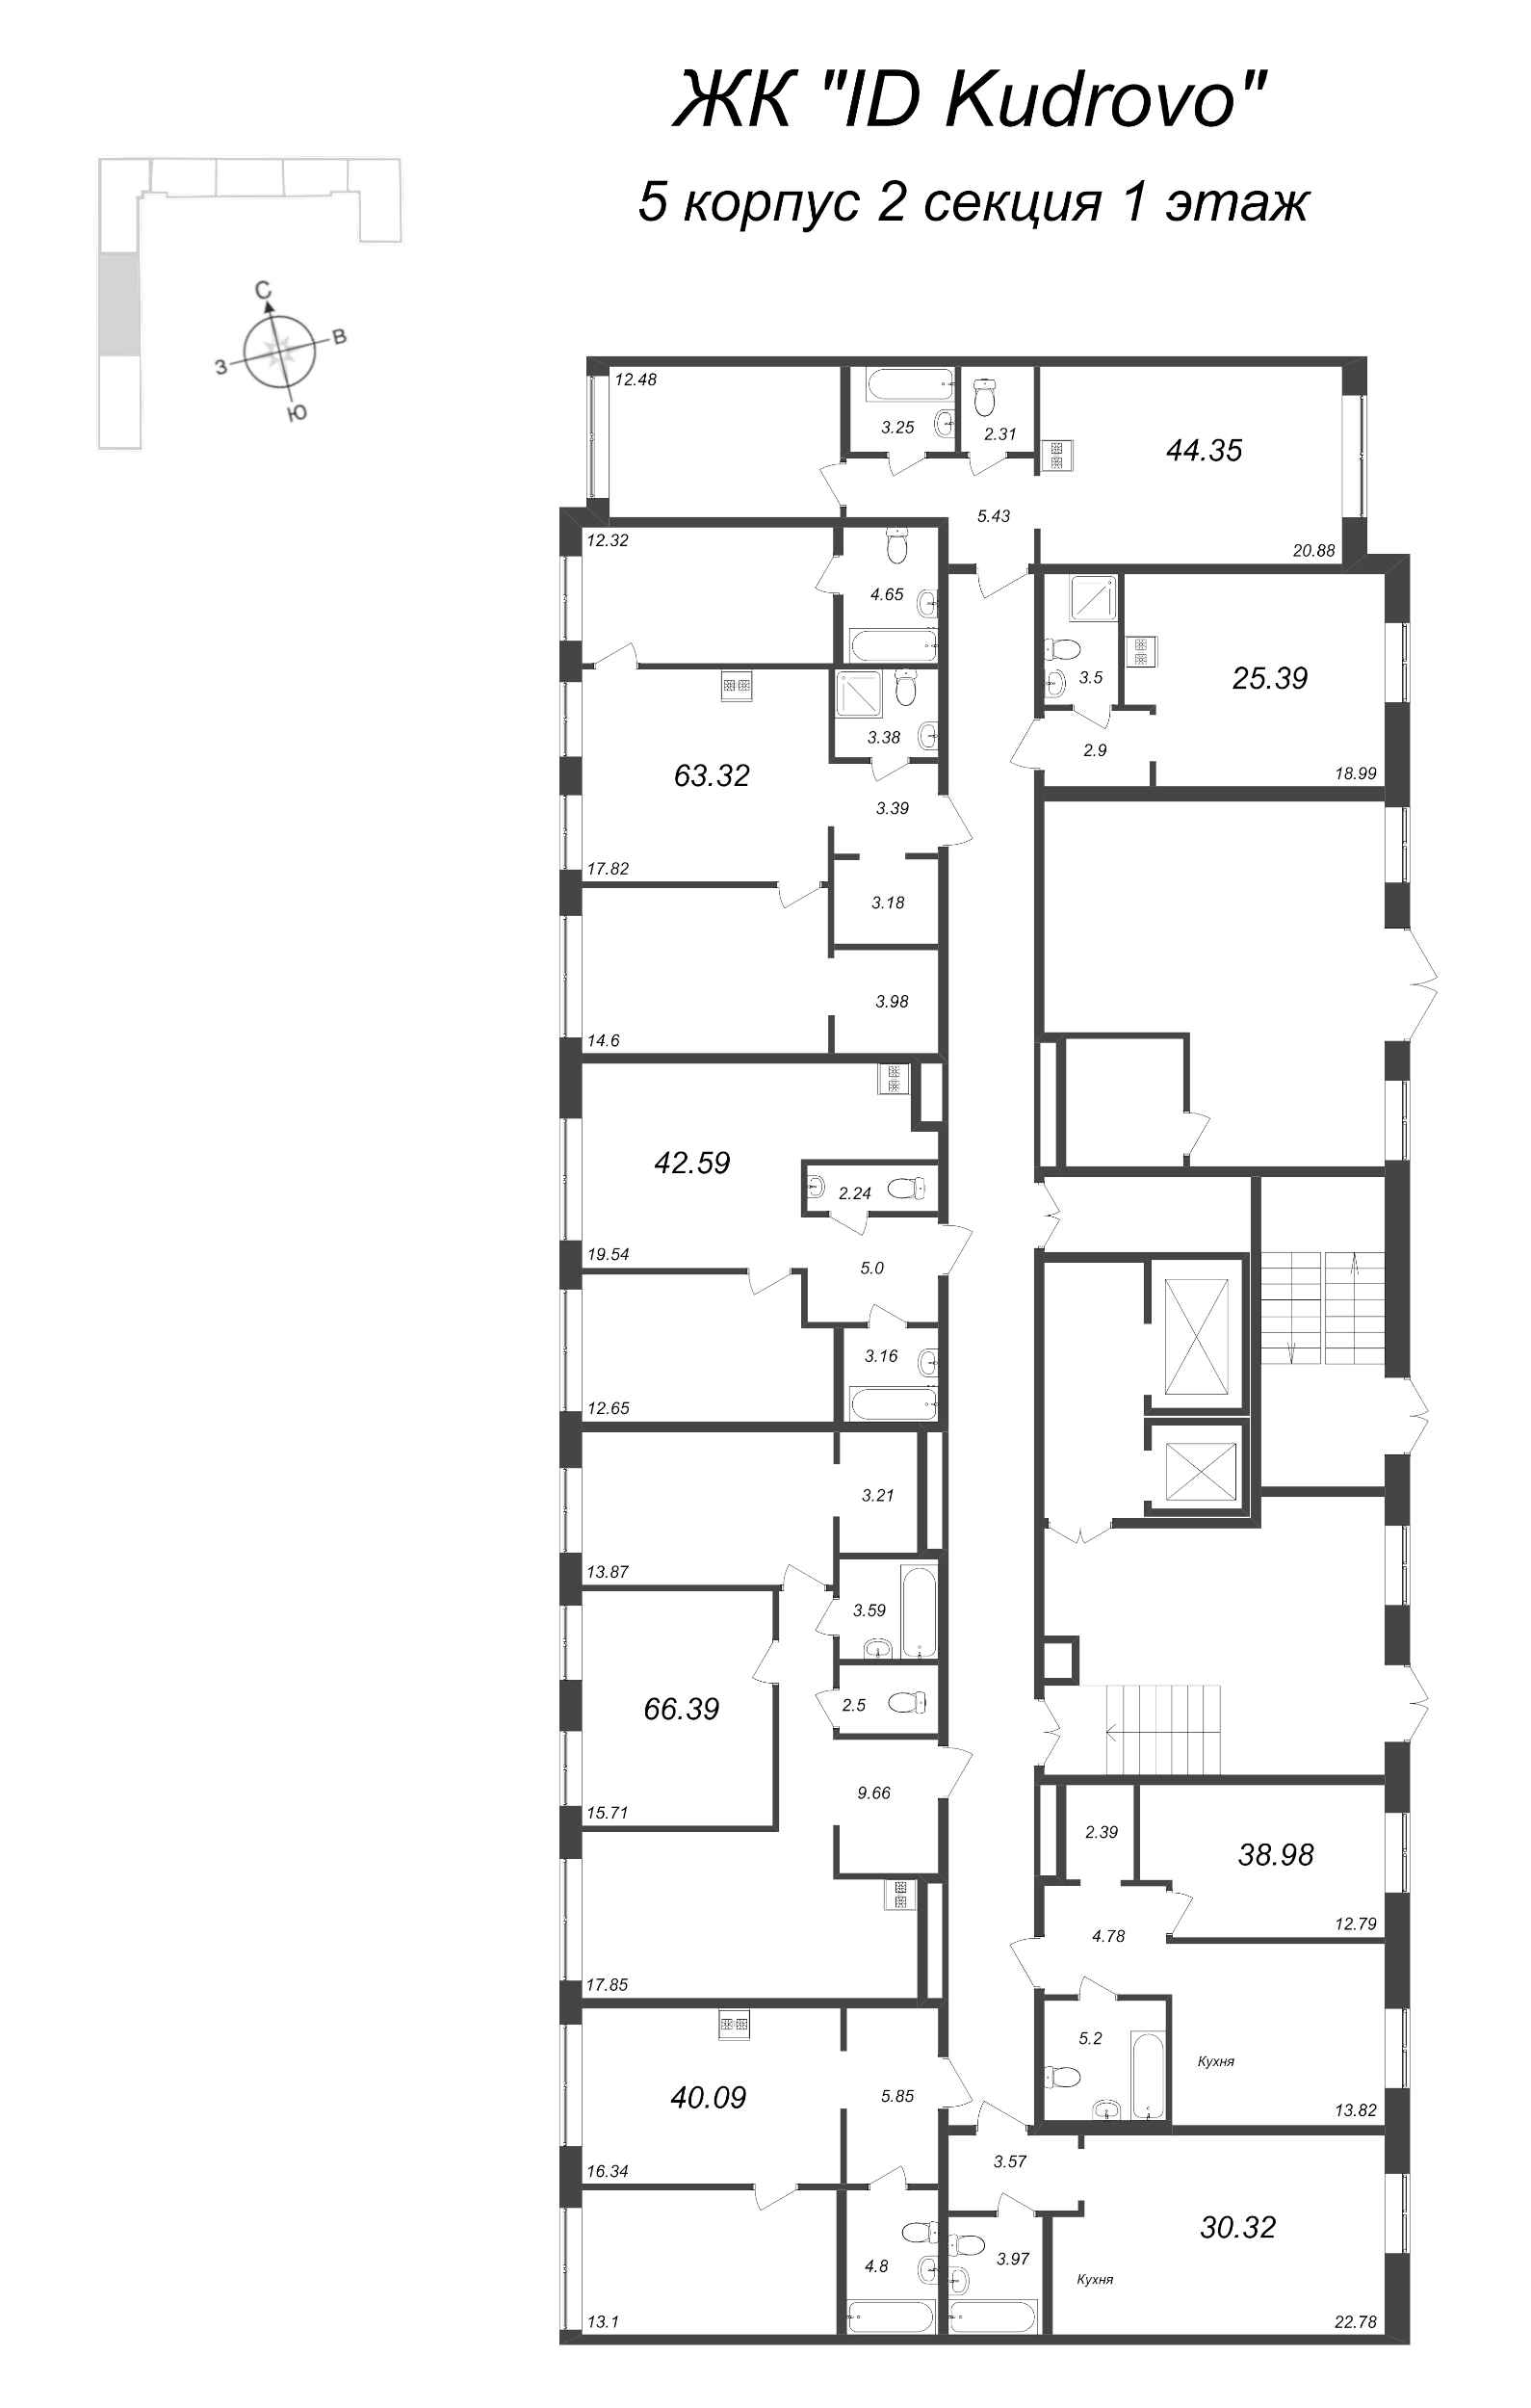 3-комнатная (Евро) квартира, 66.39 м² - планировка этажа